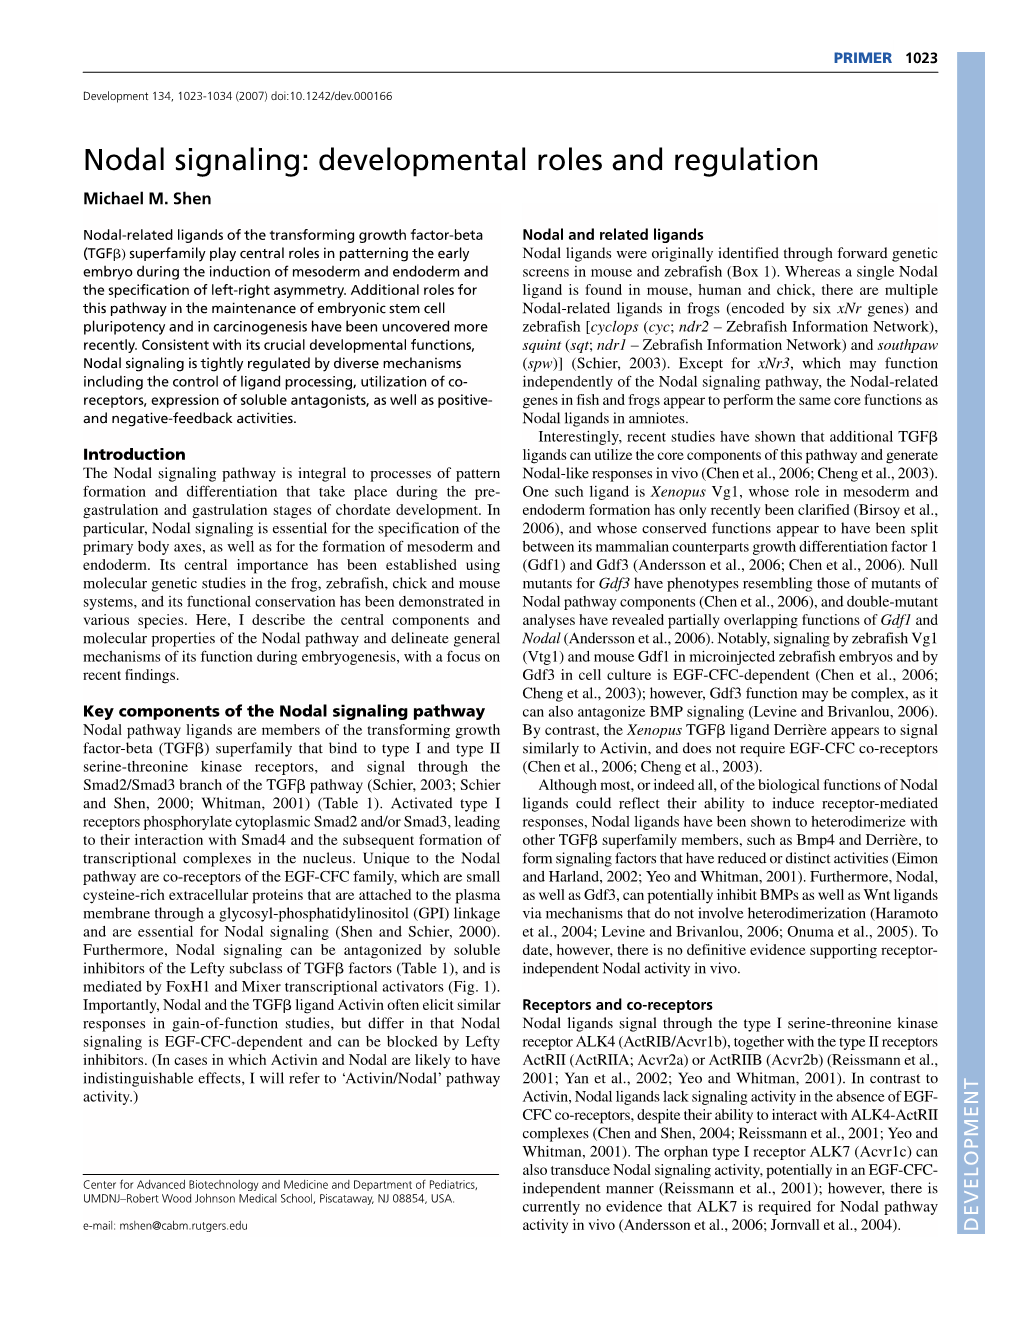 Nodal Signaling: Developmental Roles and Regulation